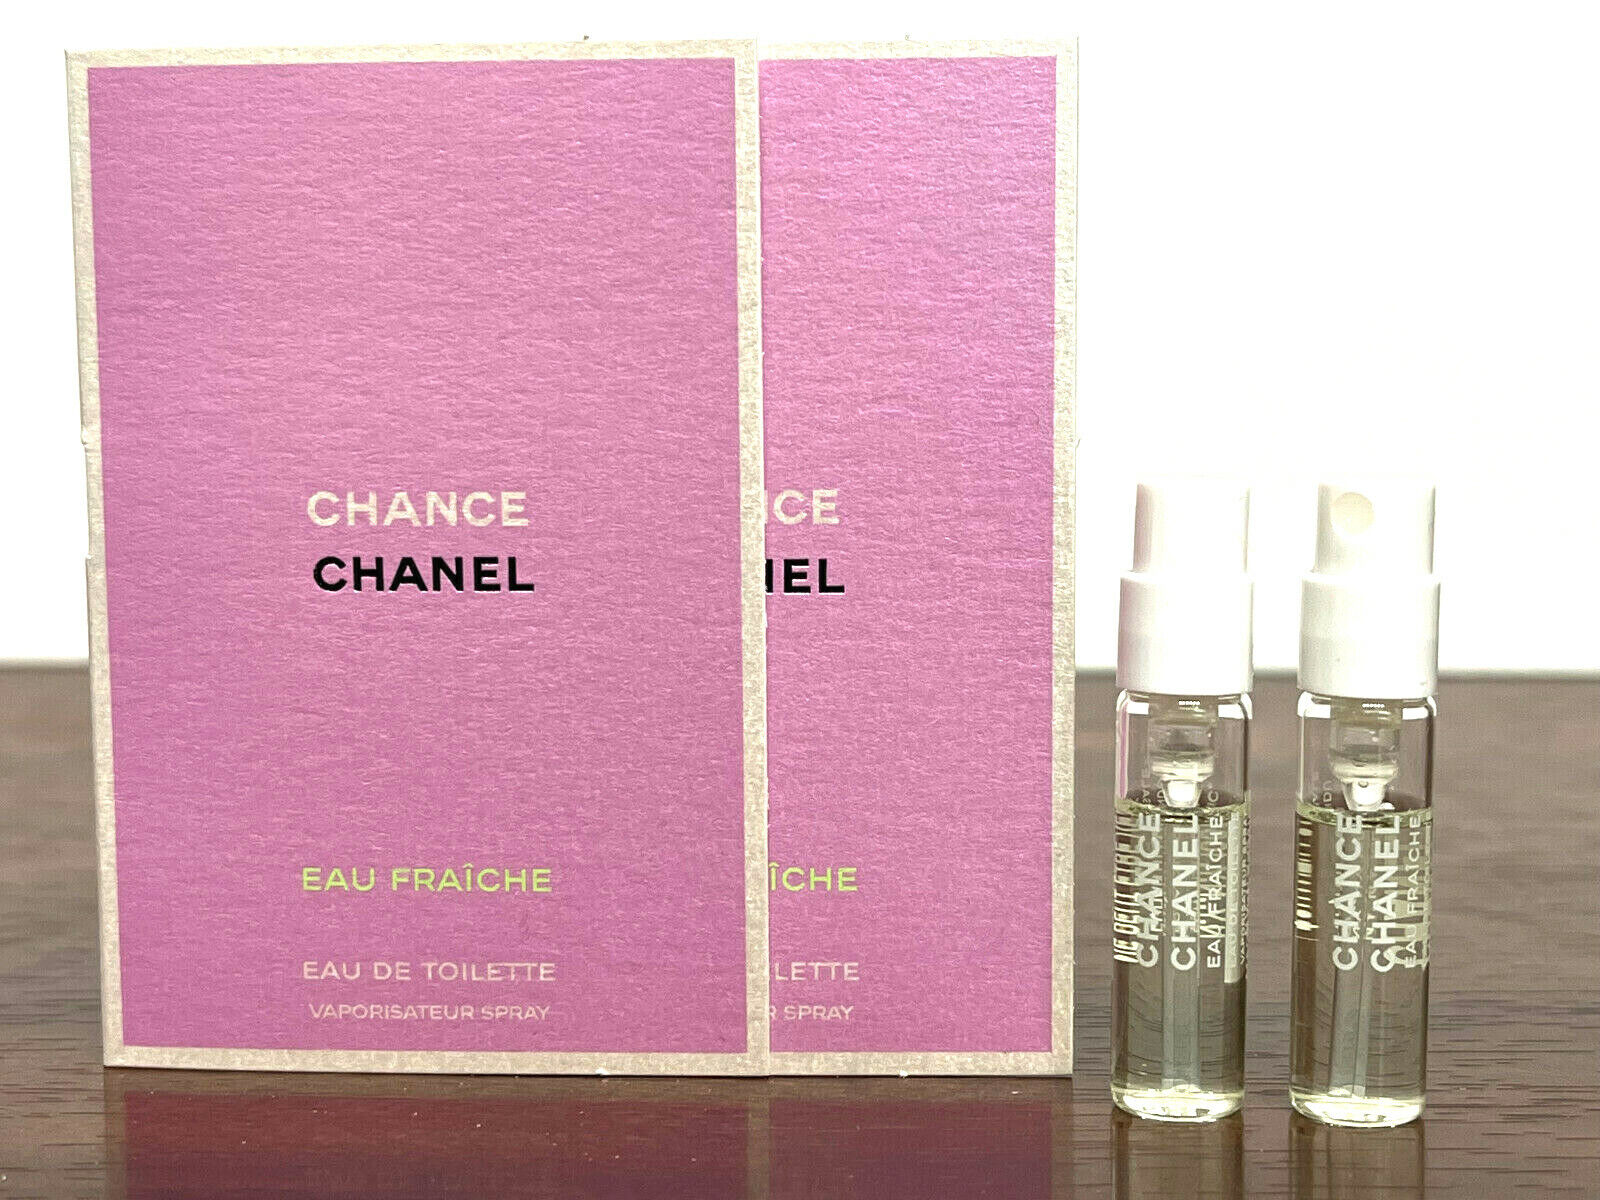 2x Chanel Chance Eau Fraiche EDT Spray Perfume Samples  /  EACH  NEW | eBay